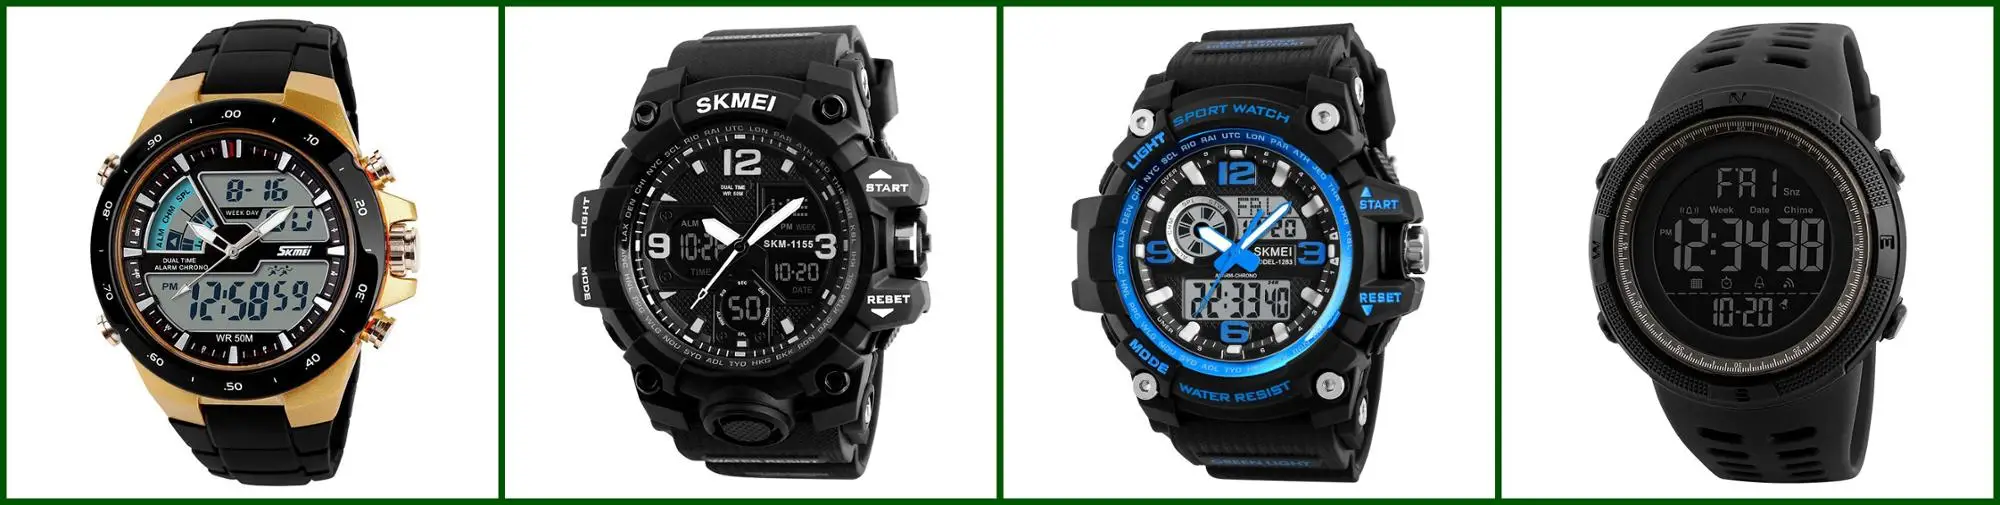 Cheap large case wrist watch dropshipping online sale digital men wrist watches